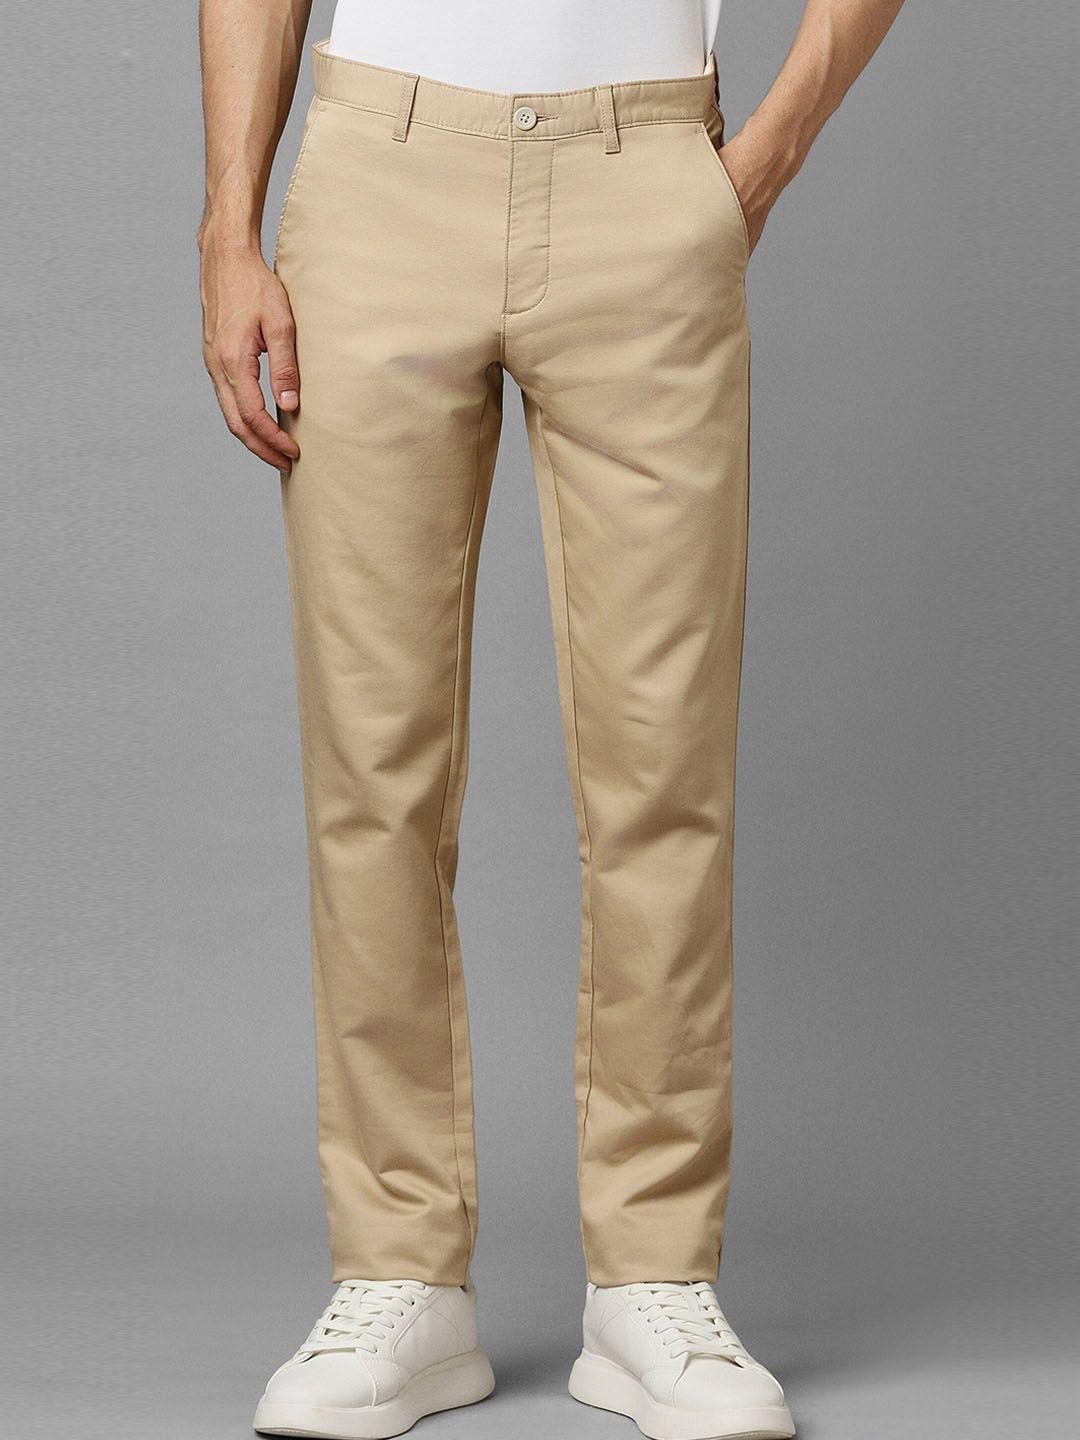 louis philippe sport khaki regular fit casual trousers